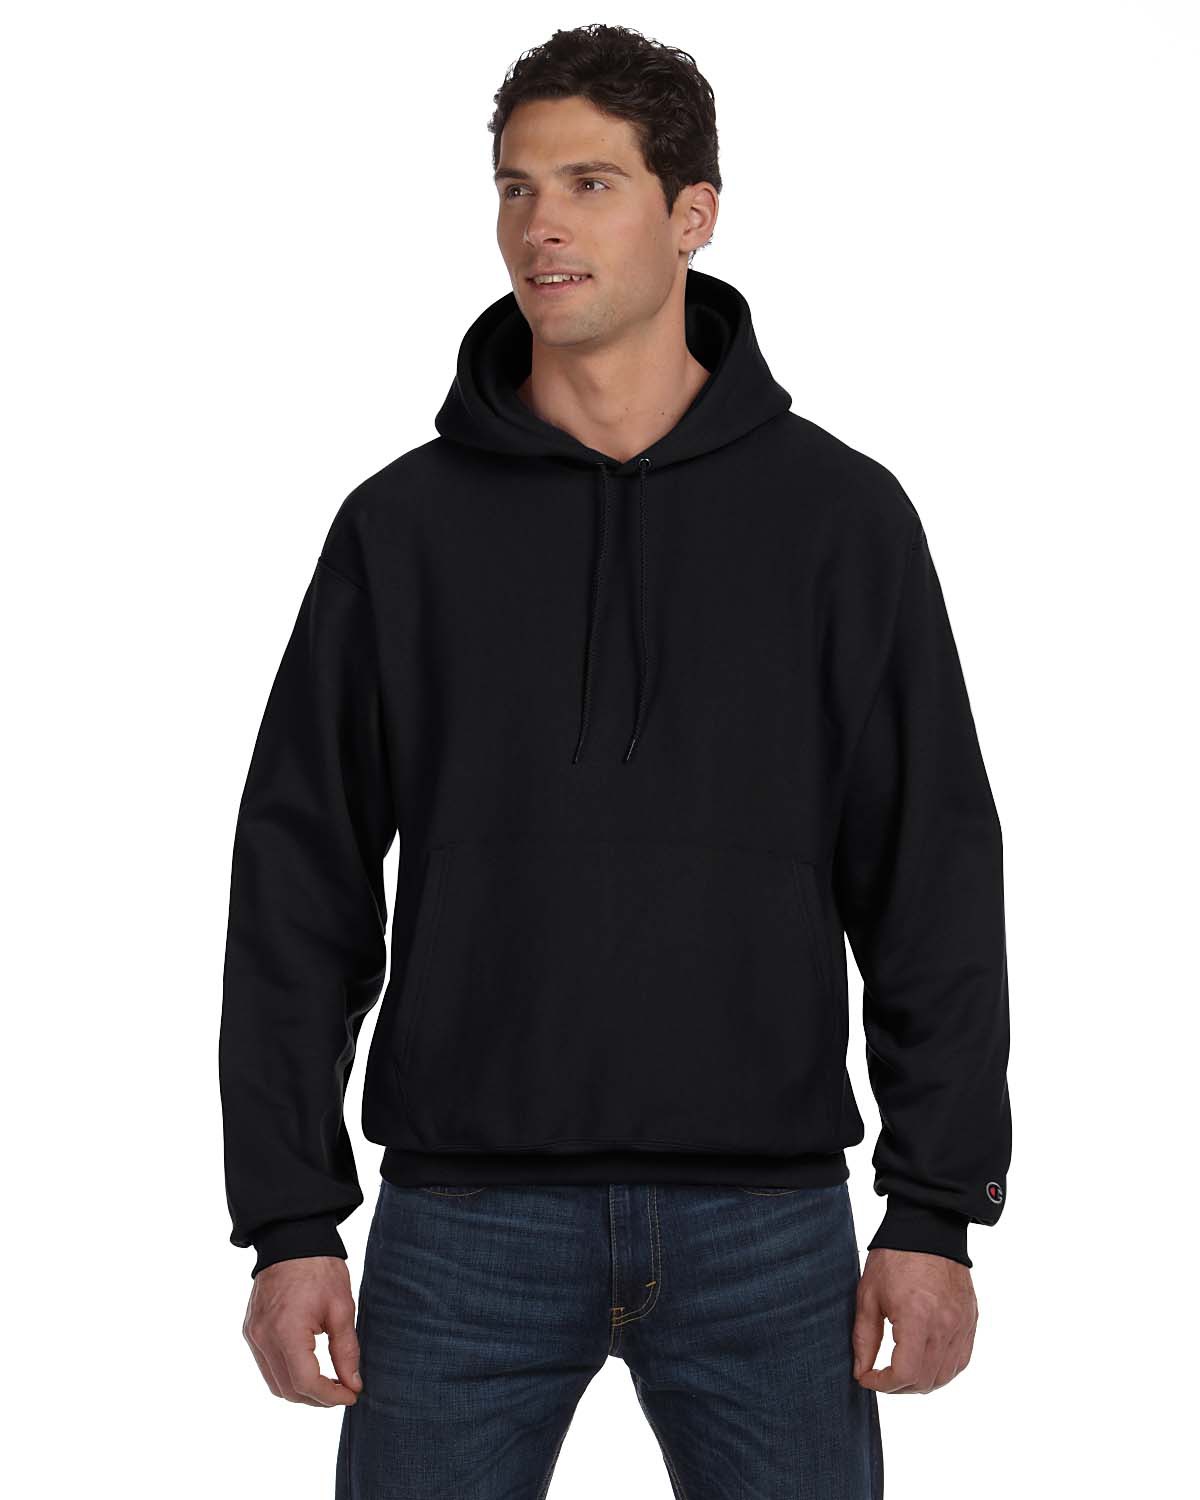 men's champion hooded sweatshirt